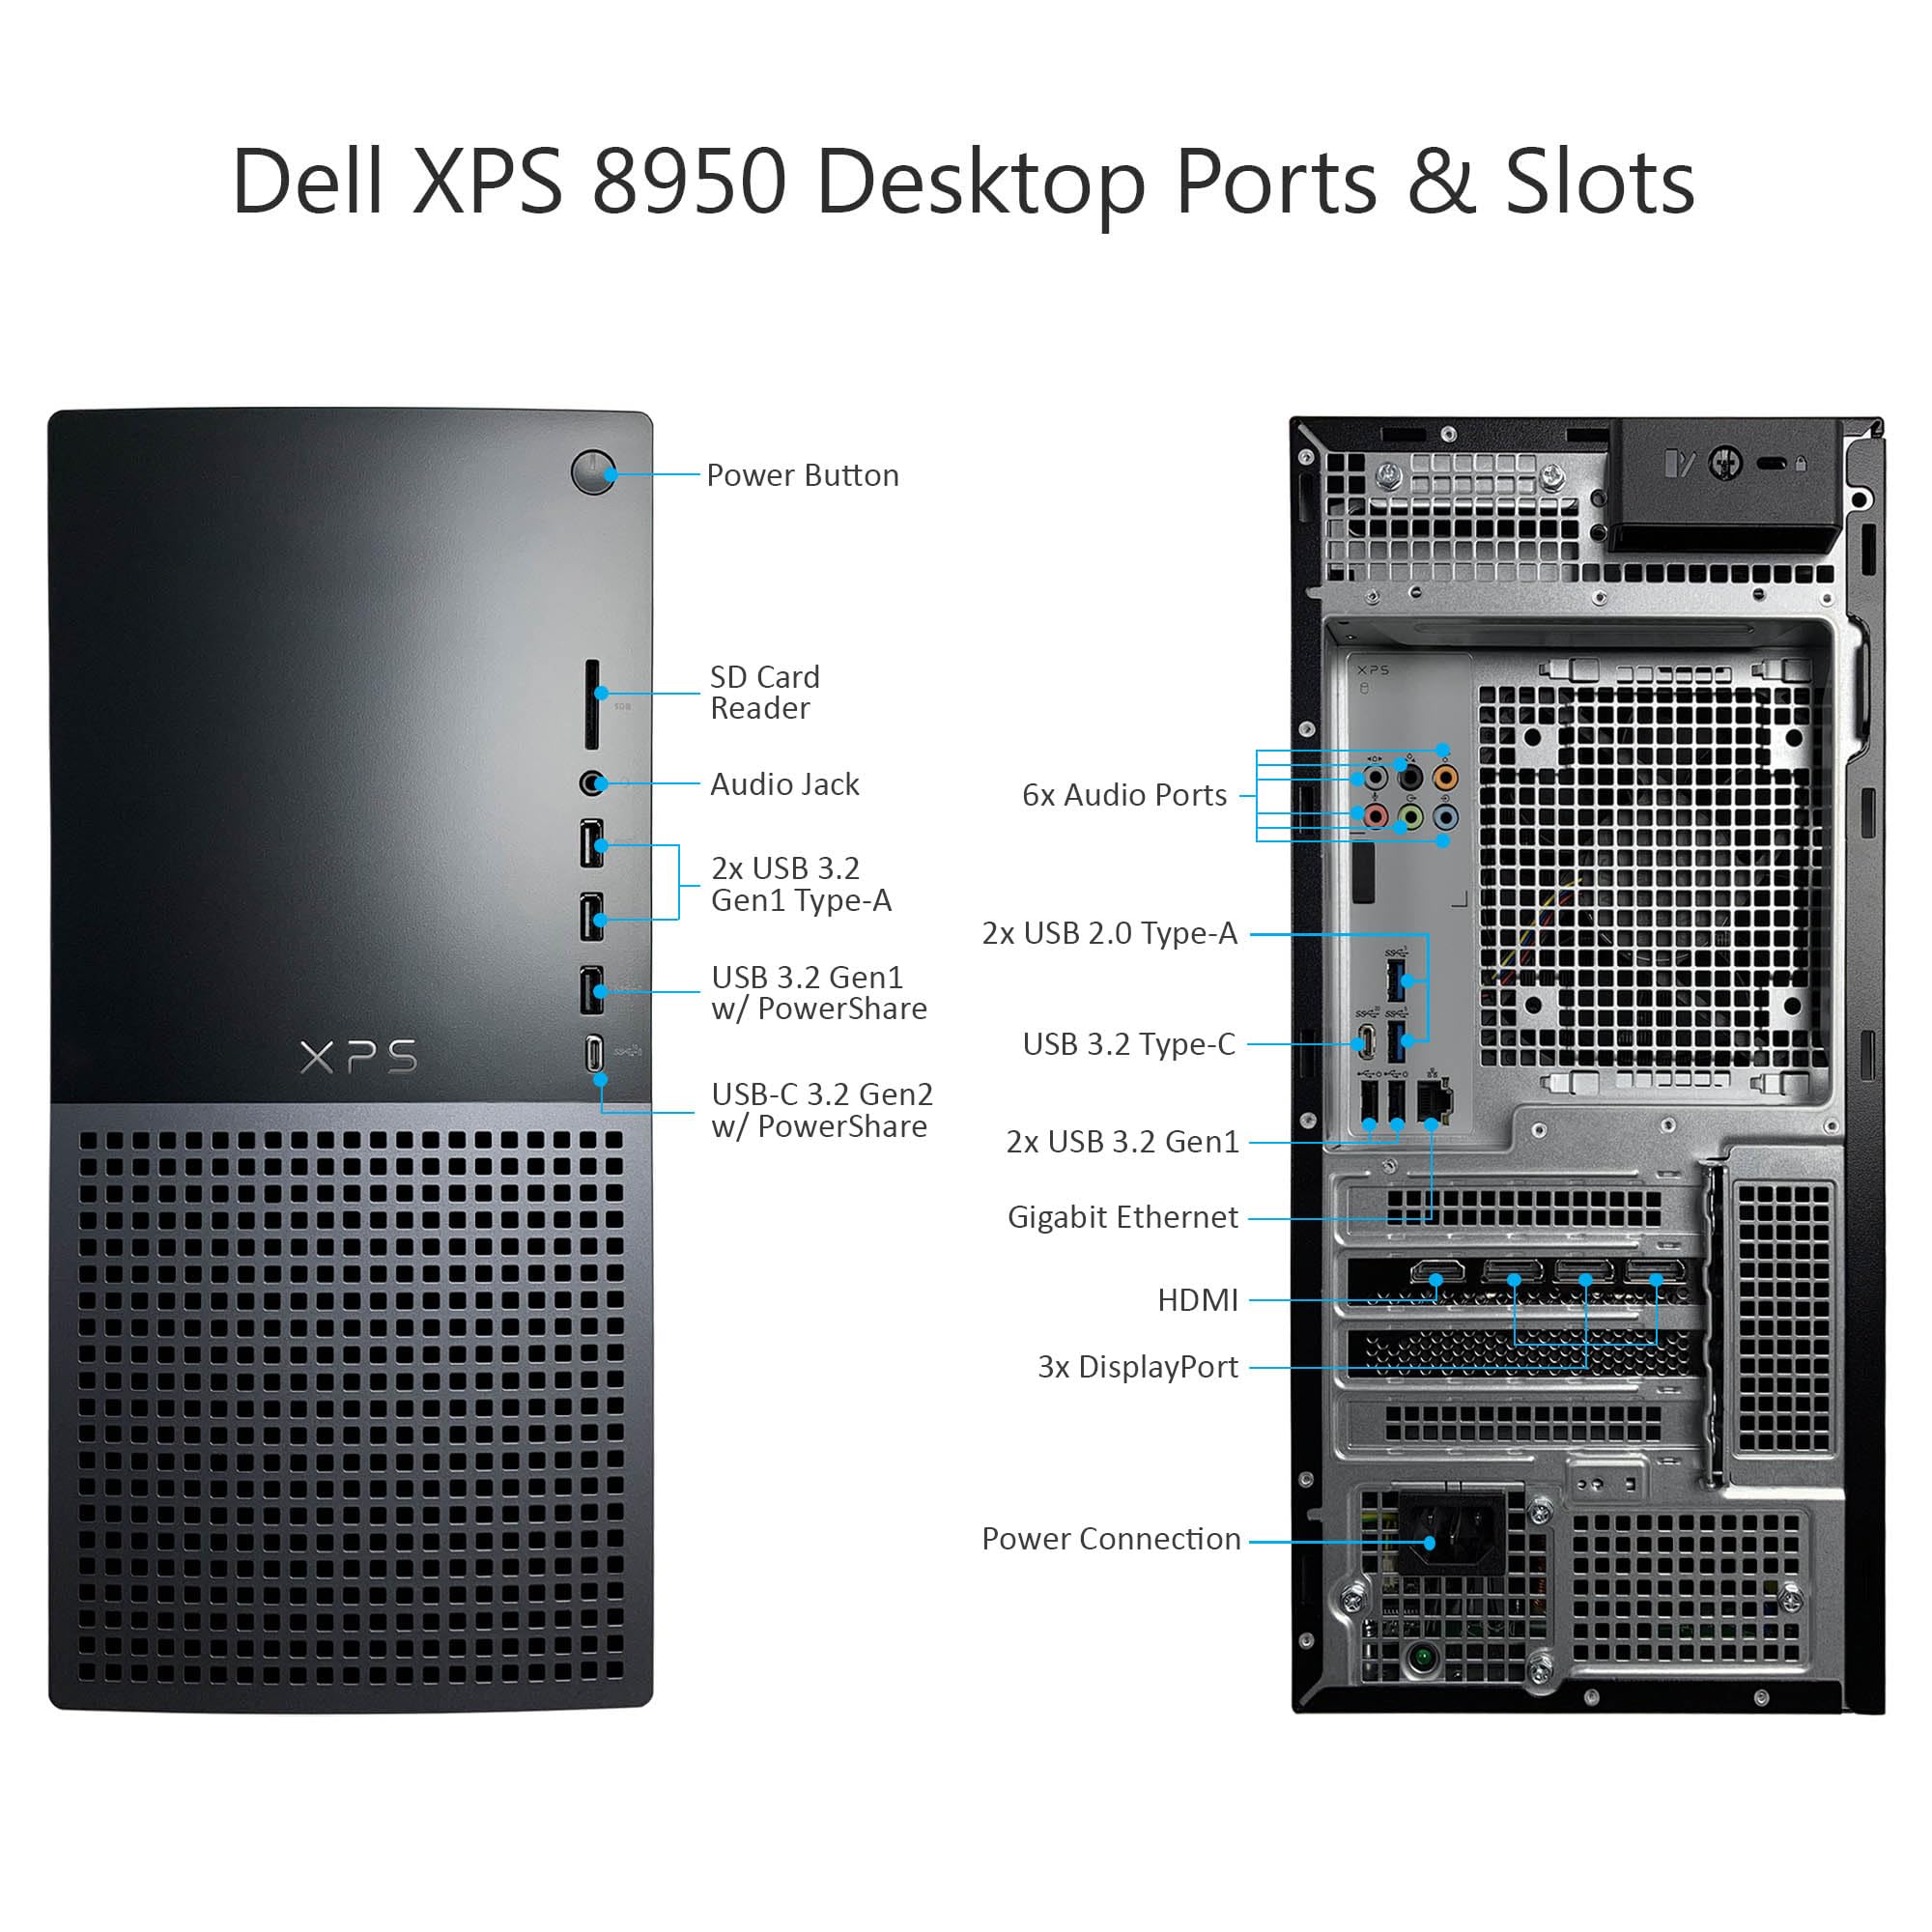 Dell XPS 8950 Gaming Desktop Computer - 12th Gen Intel Core i9-12900K up to 5.2 GHz CPU, 16GB DDR5 RAM, 512GB NVMe SSD + 1TB HDD, AMD Radeon RX 6700XT 12GB, Killer Wi-Fi 6, Windows 11 Home